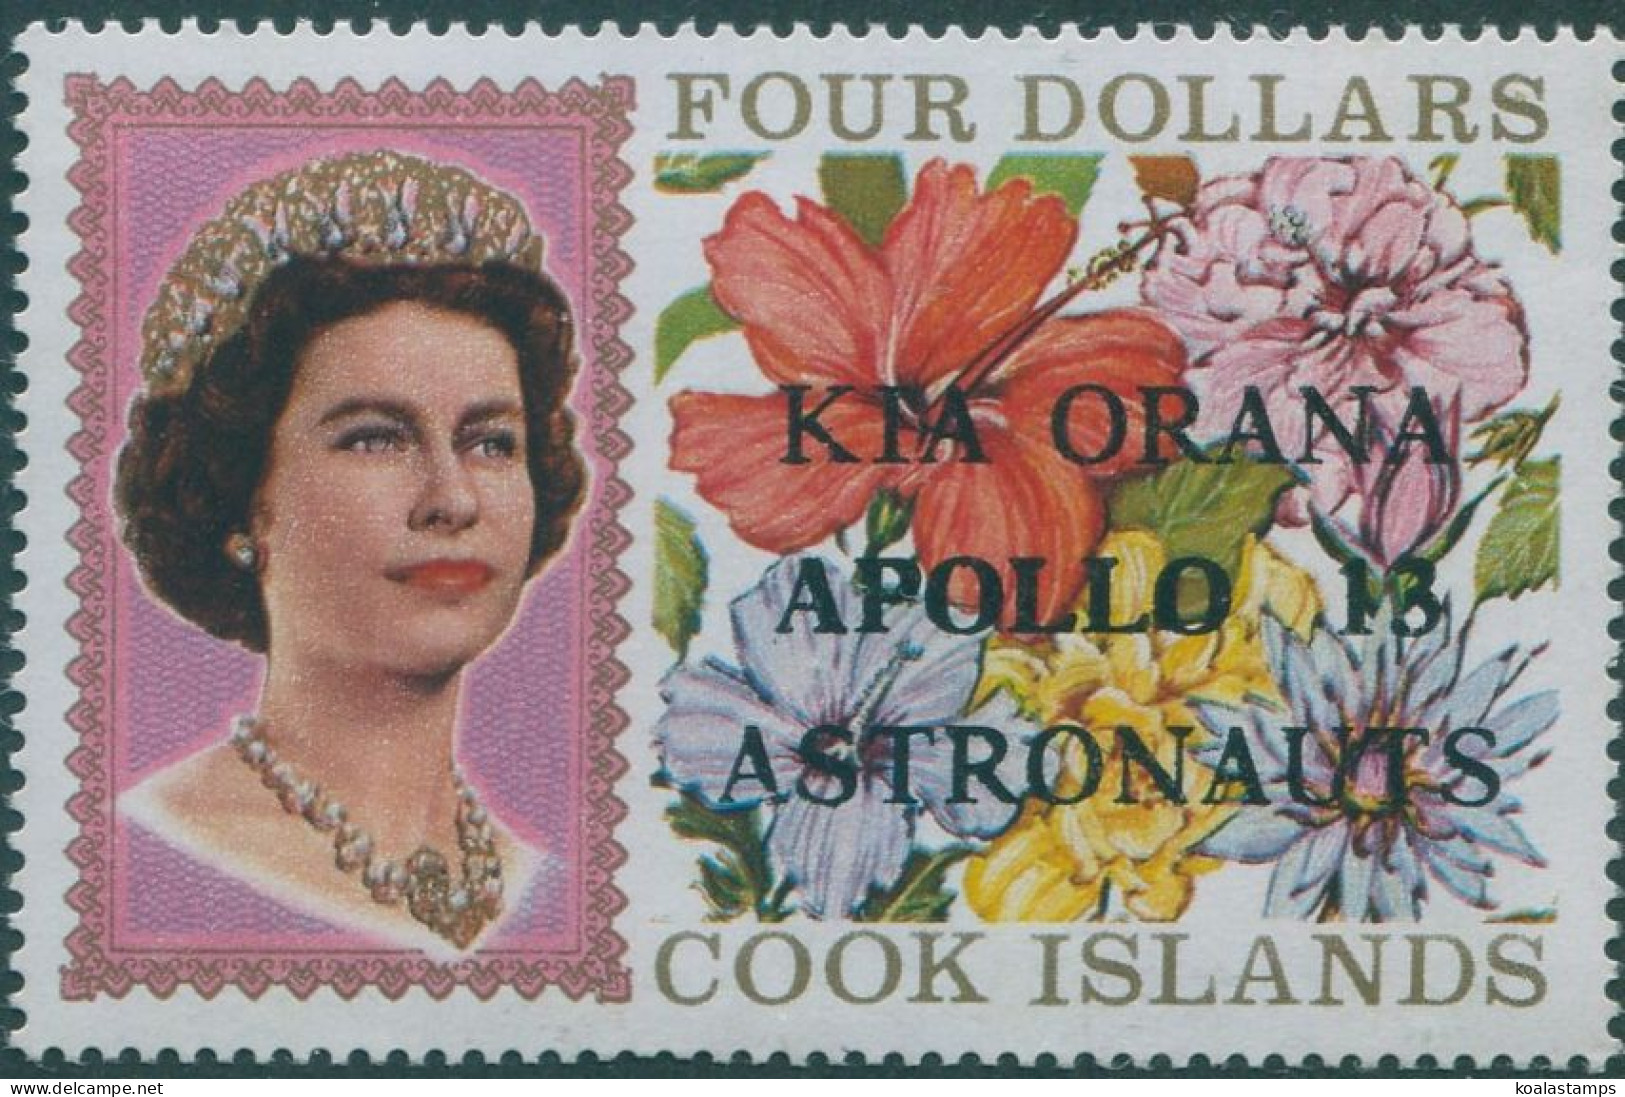 Cook Islands 1970 SG327 $4 QEII Flowers KIA ORANA APOLLO 13 ASTRONAUTS Ovpt MNH - Cook